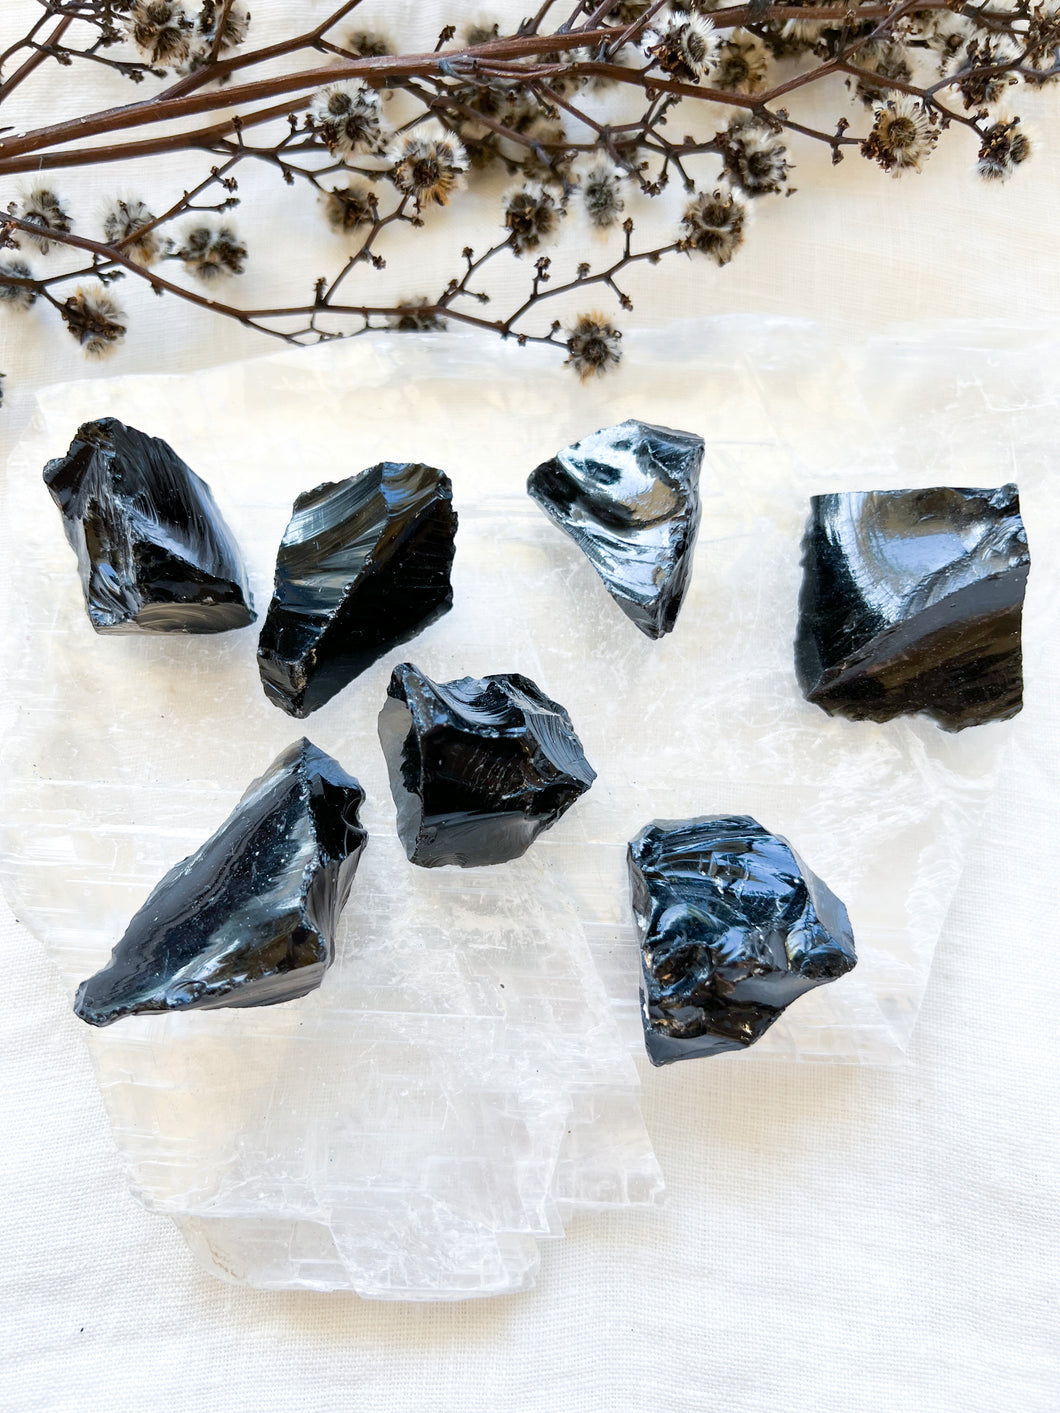 Black Obsidian Rough